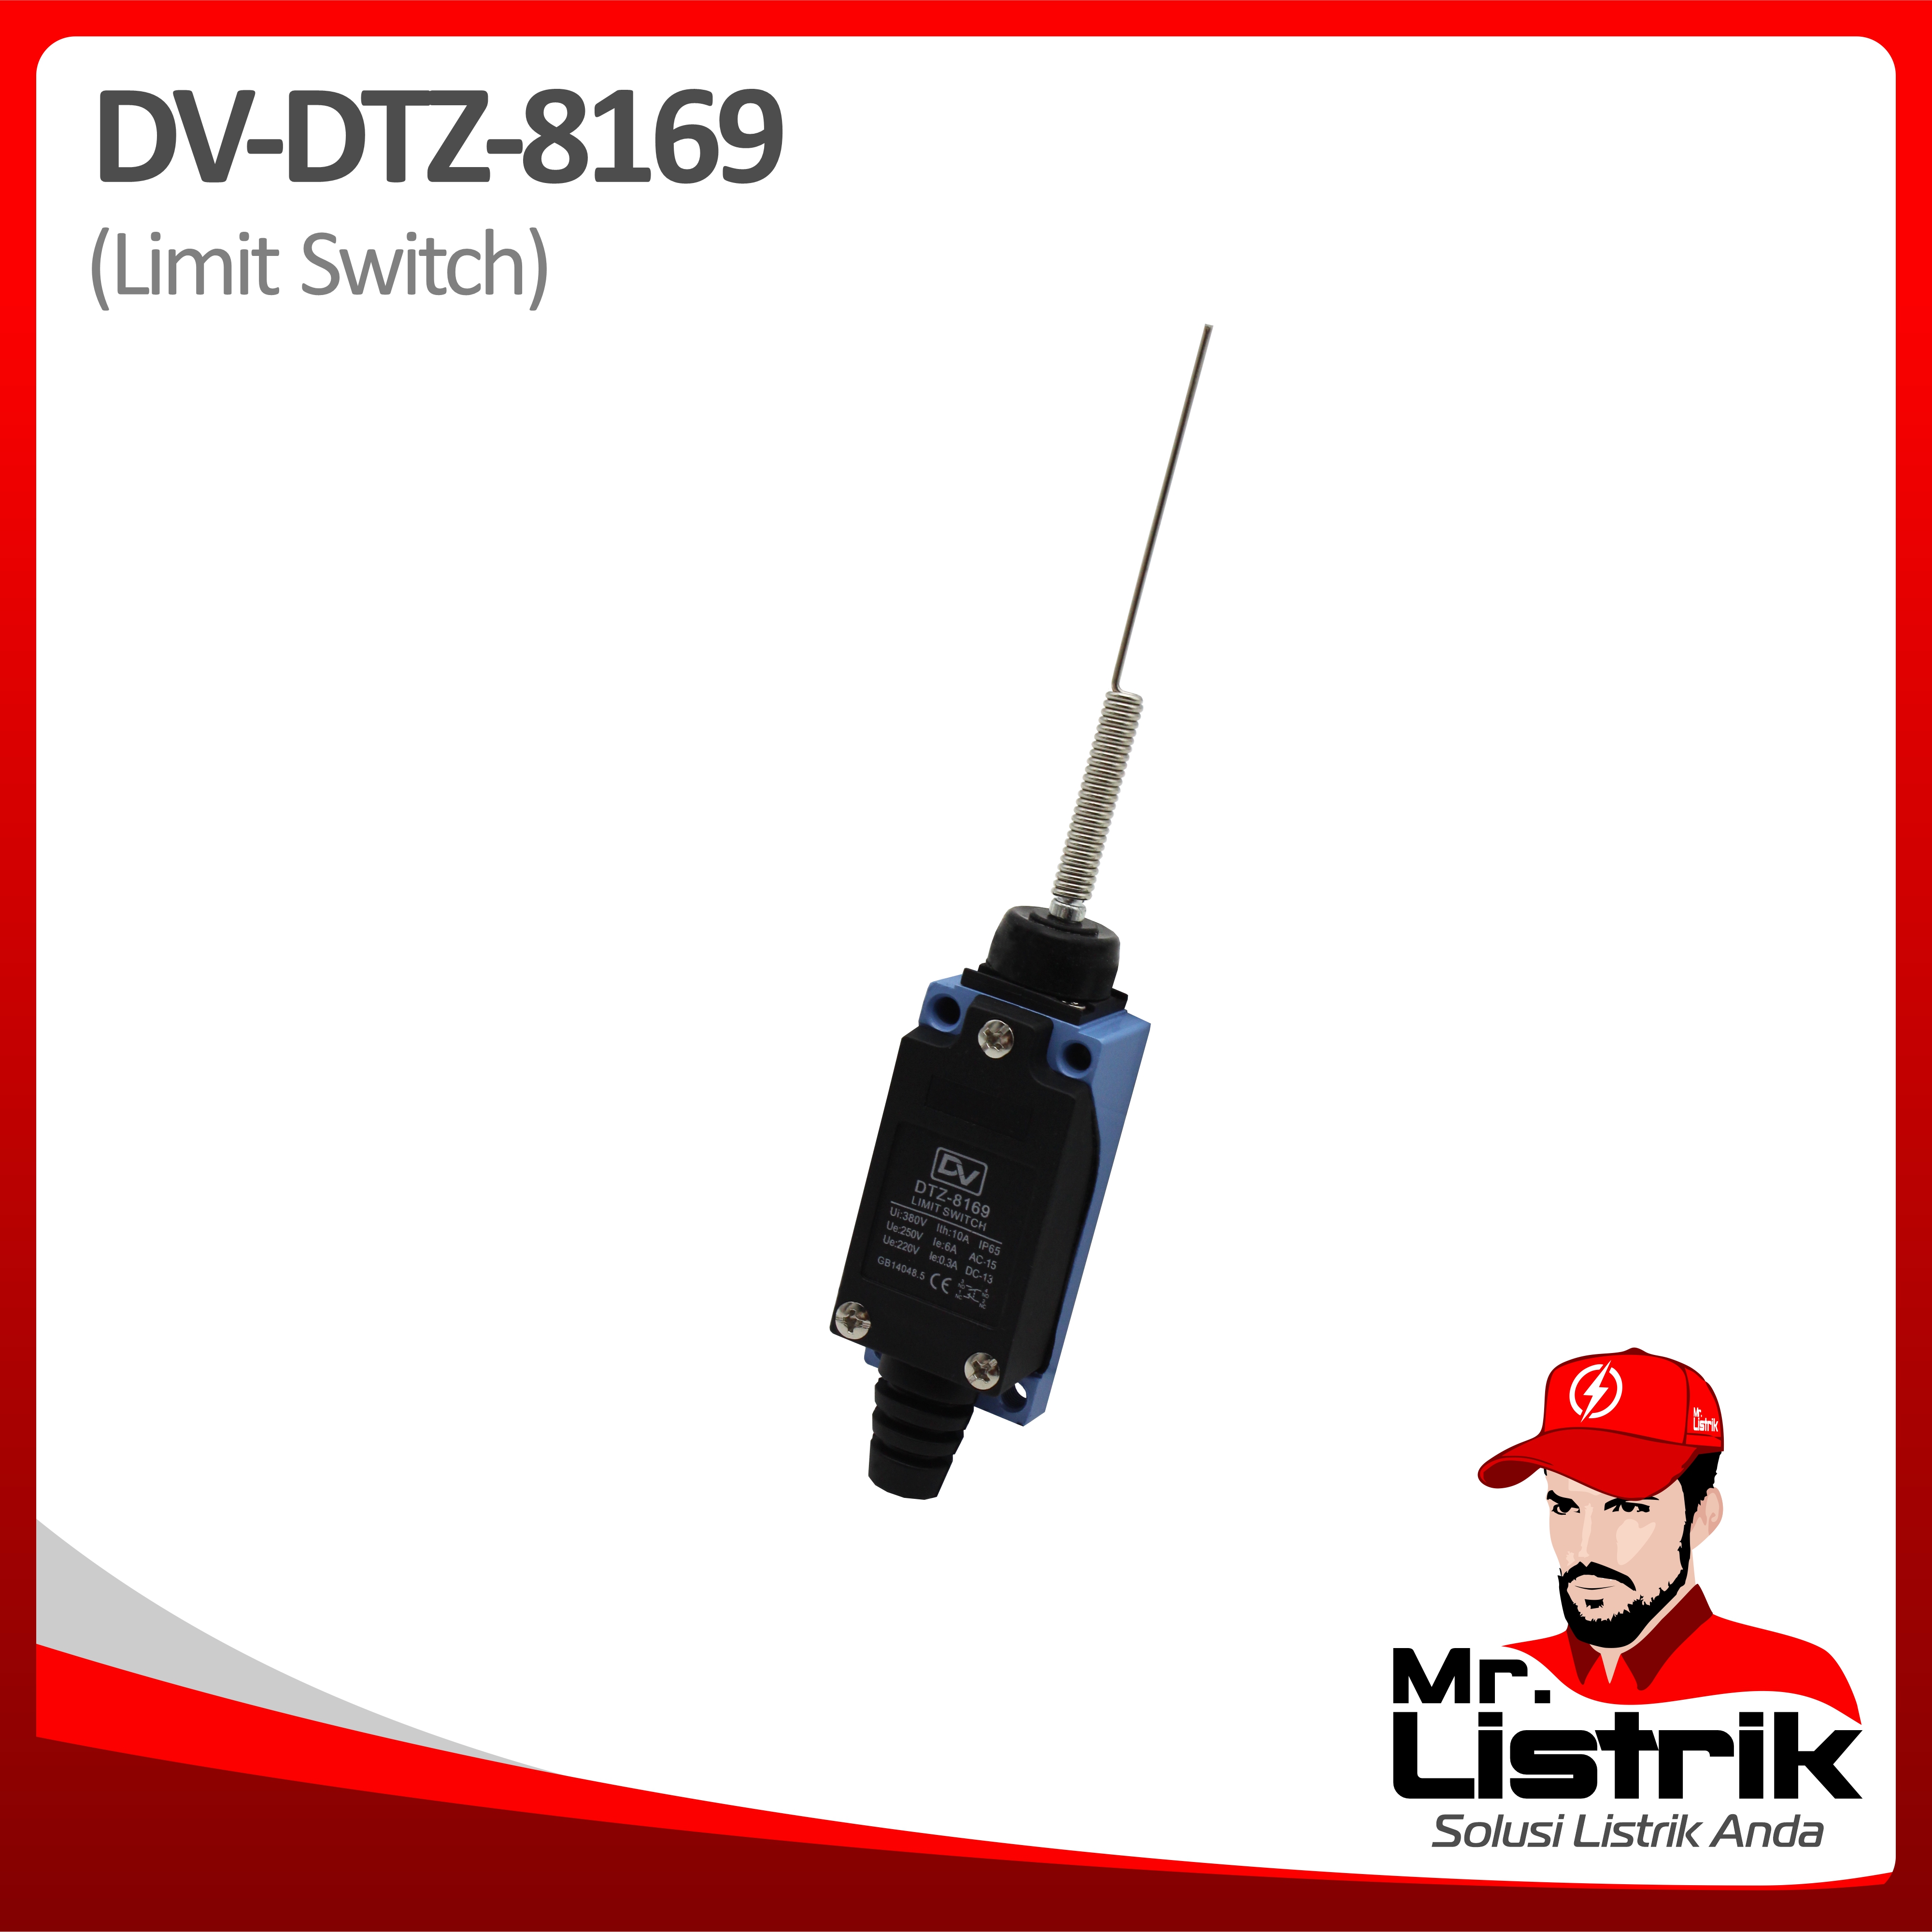 Limit Switch TZ Series DV DTZ-8169